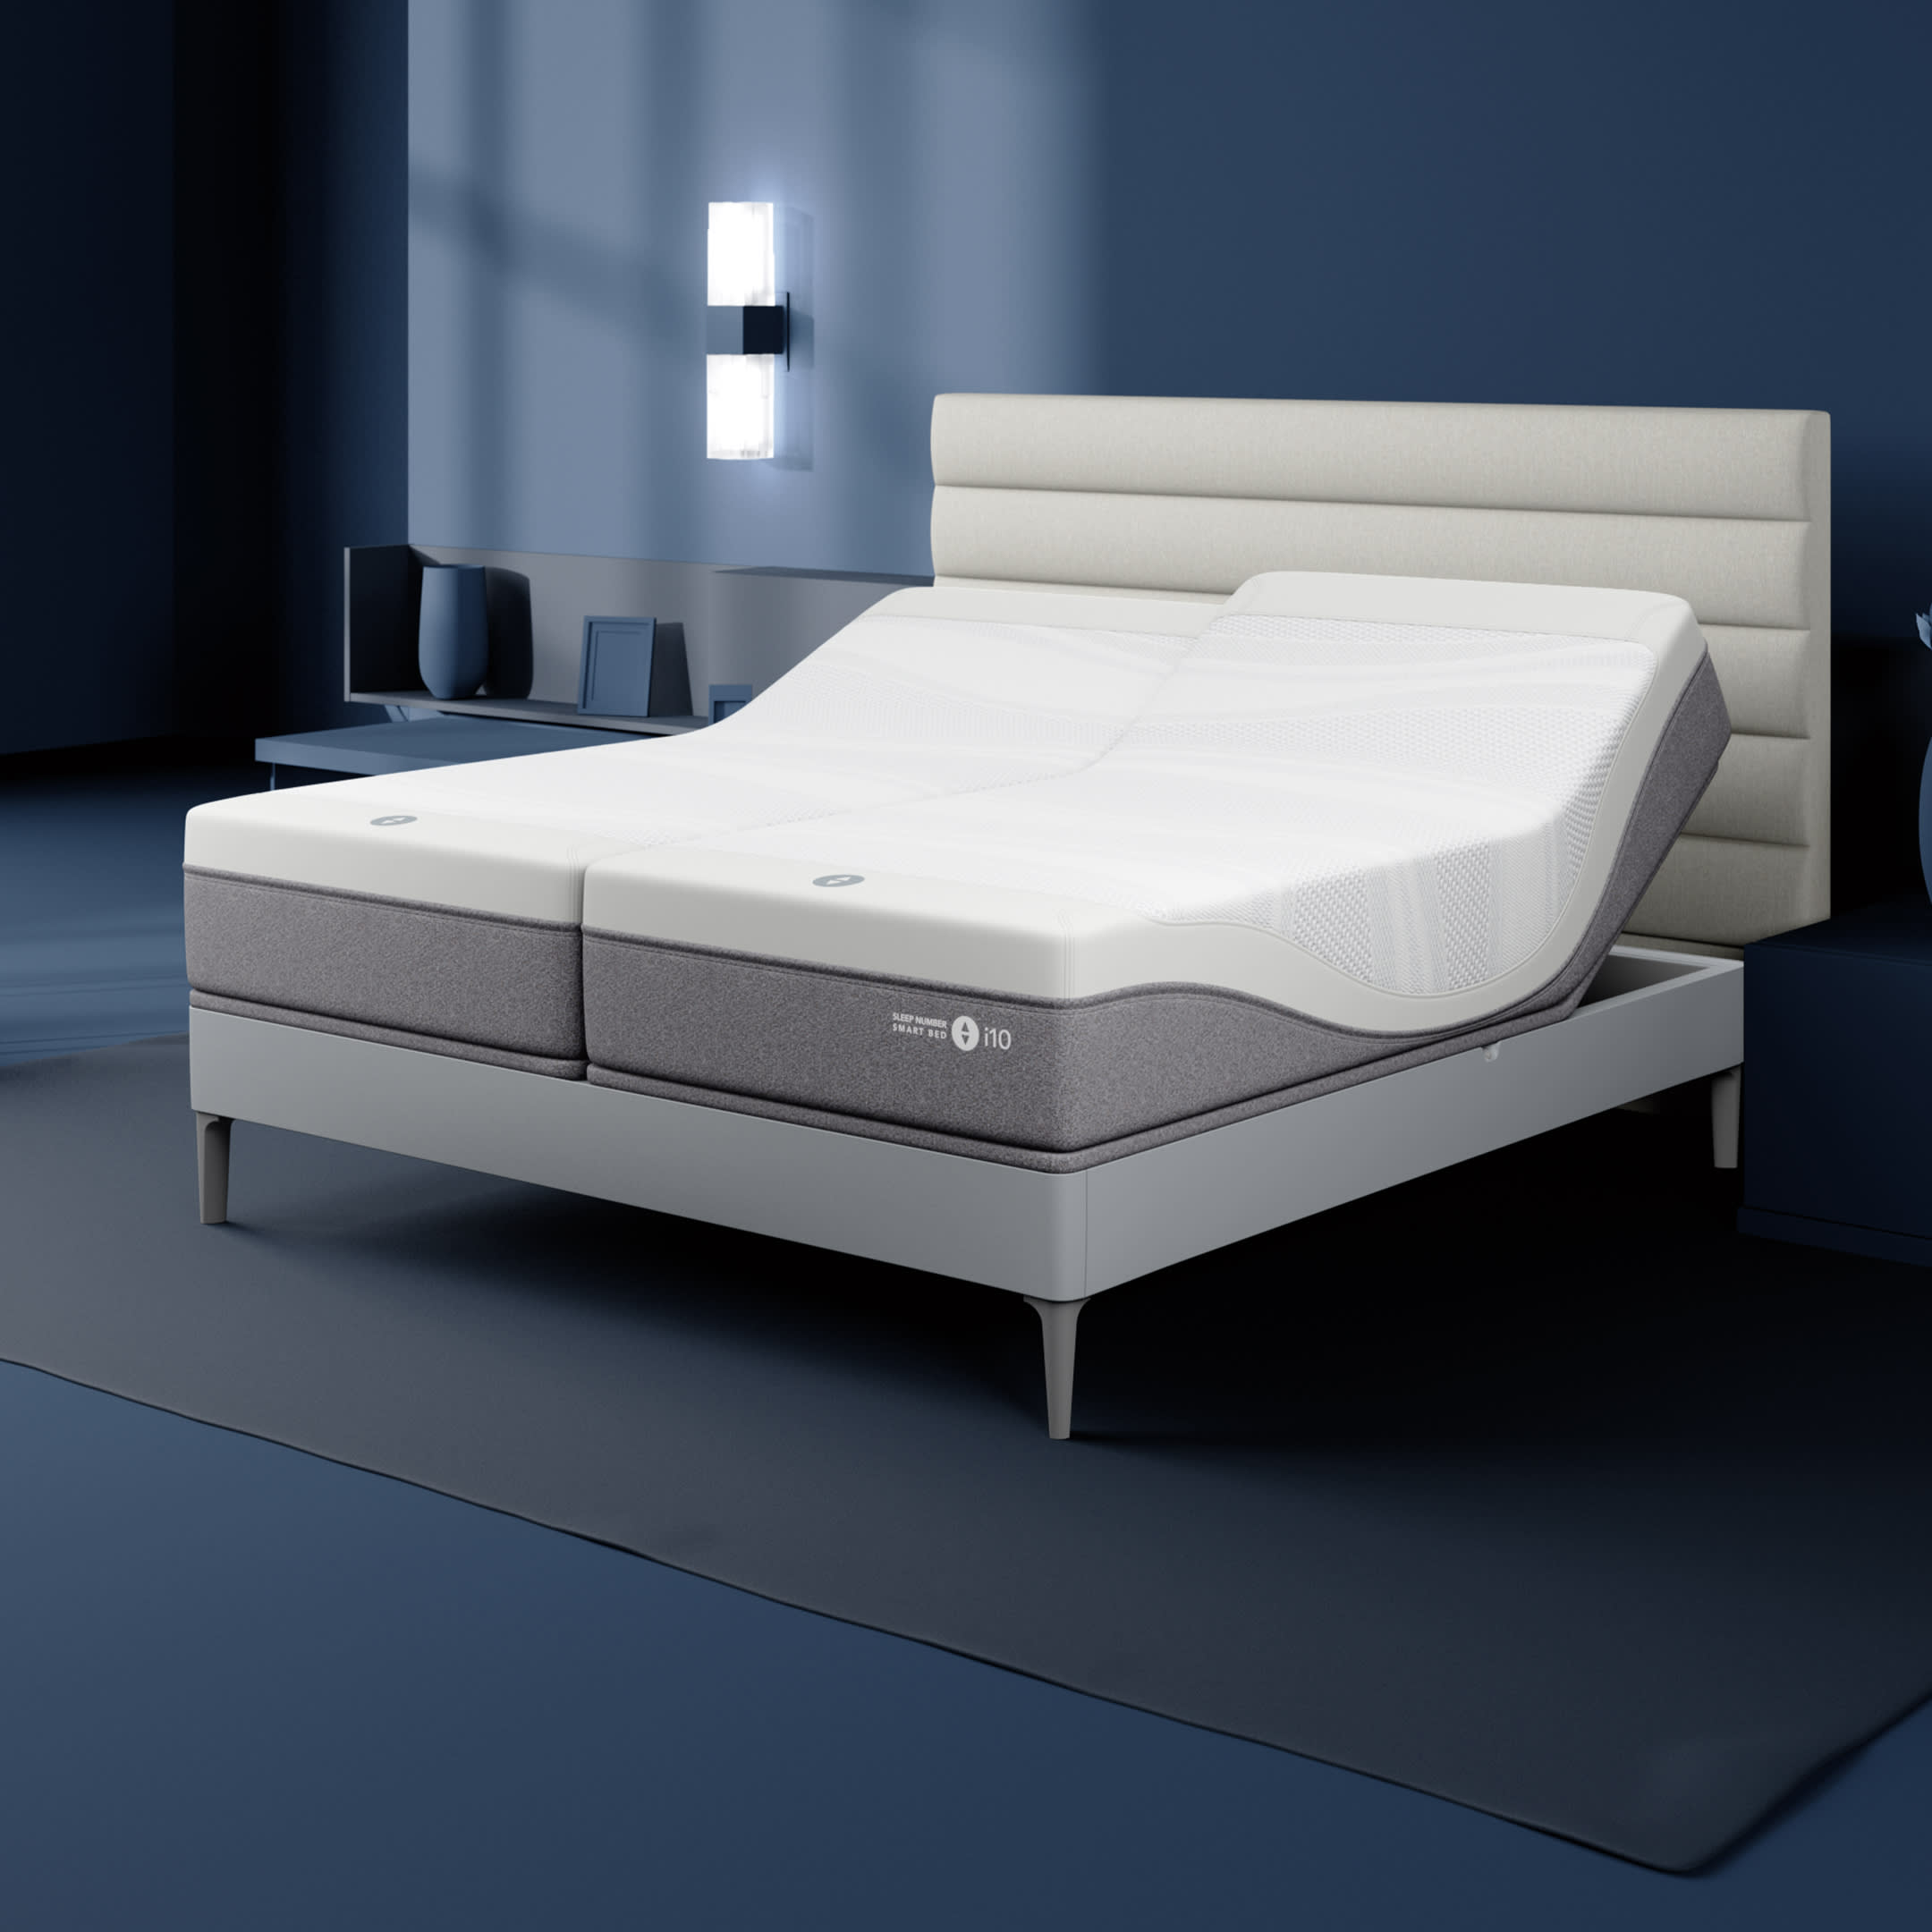 Adjustable Beds & Bases - Sleep Number